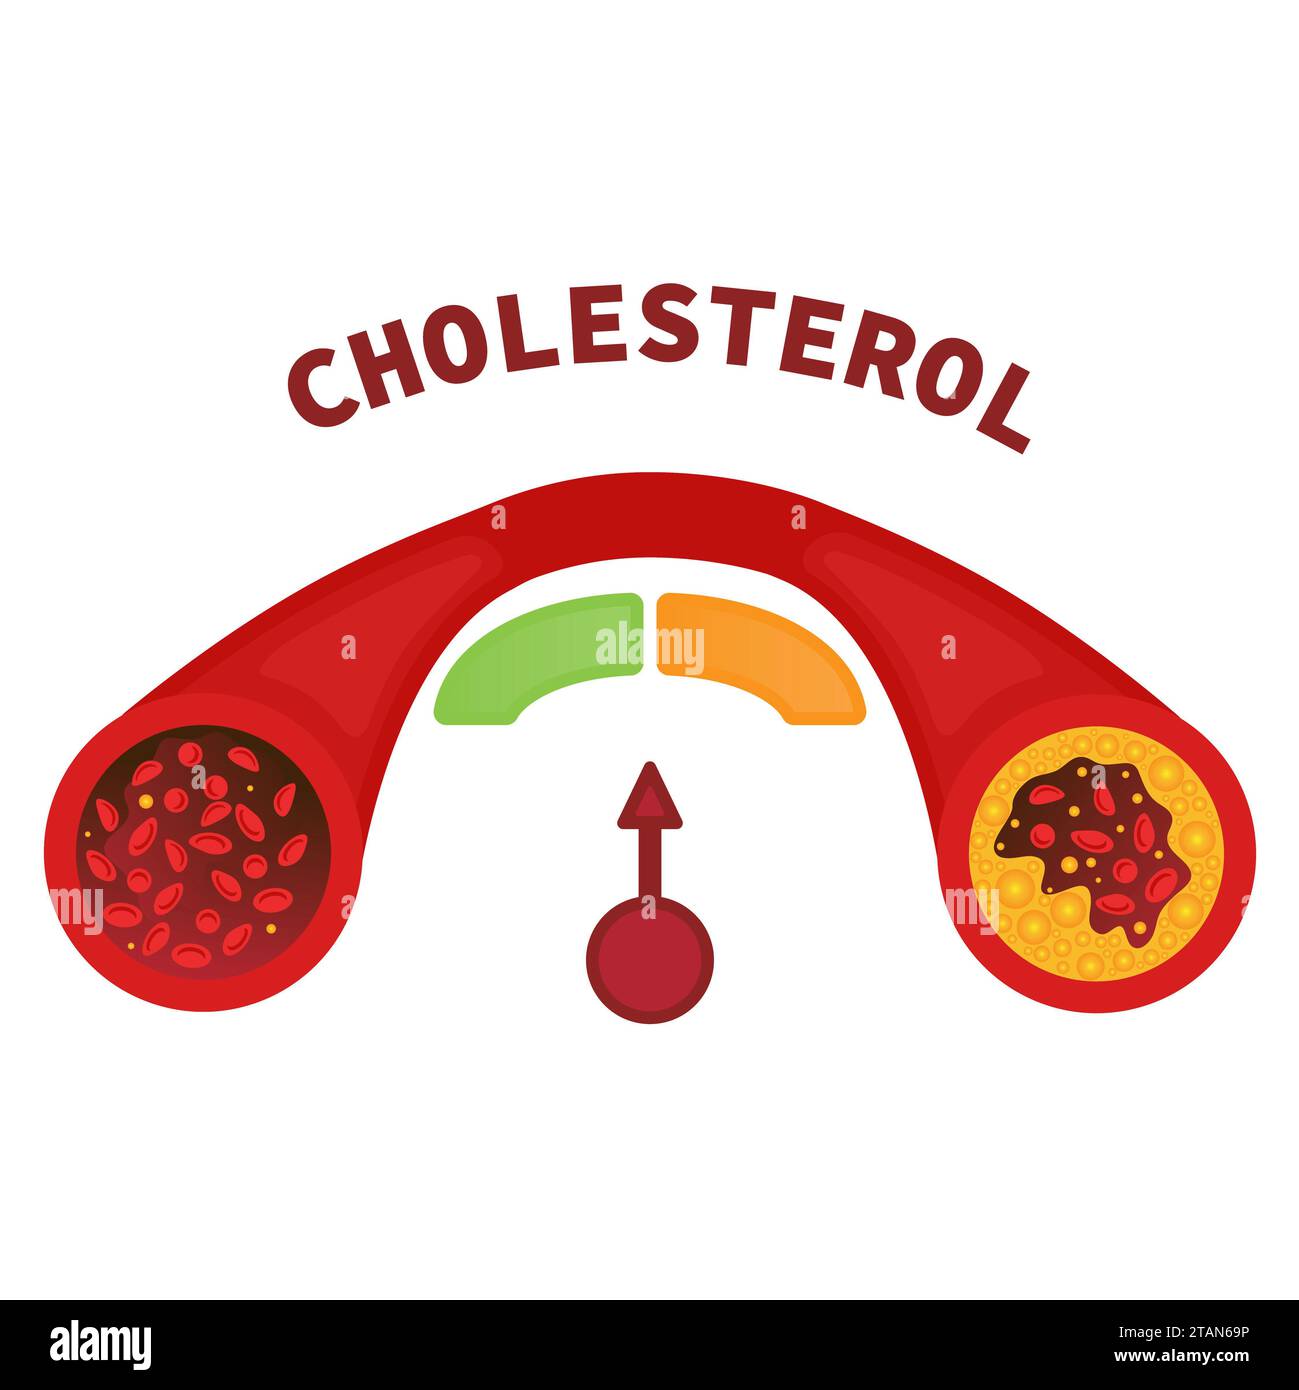 Cholesterol levels, conceptual illustration Stock Photo